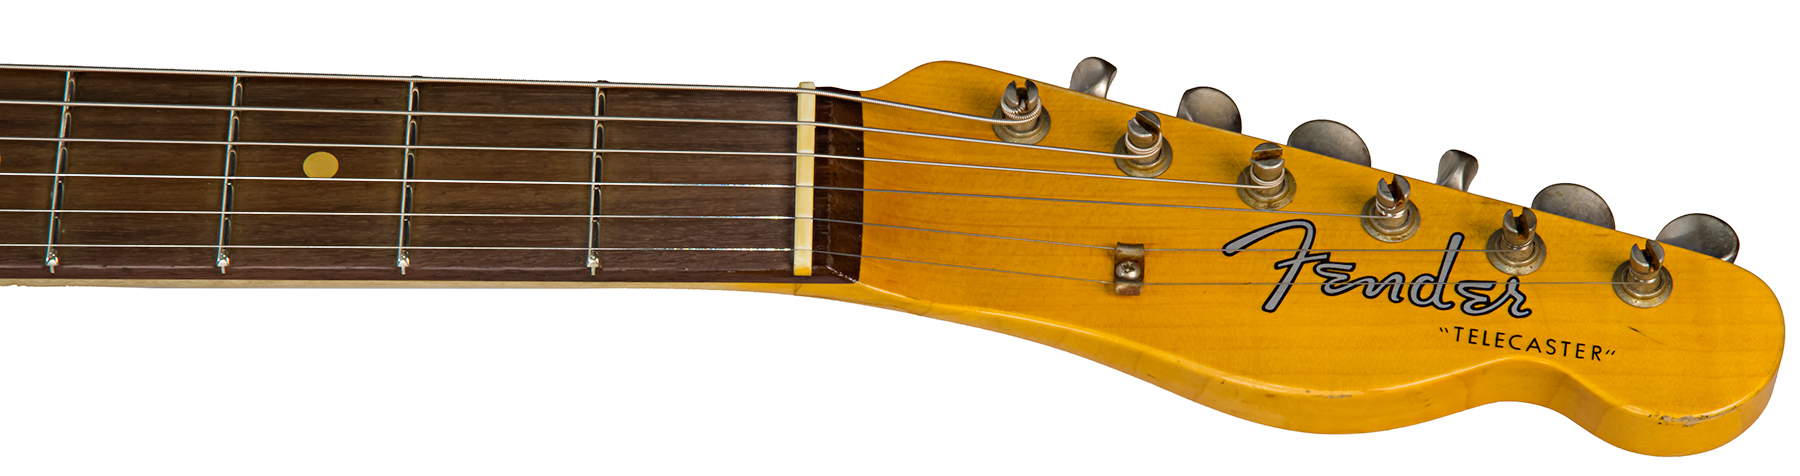 Fender Custom Shop Tele 1960 Rw #cz549121 - Journeyman Relic Purple Metallic - Televorm elektrische gitaar - Variation 4